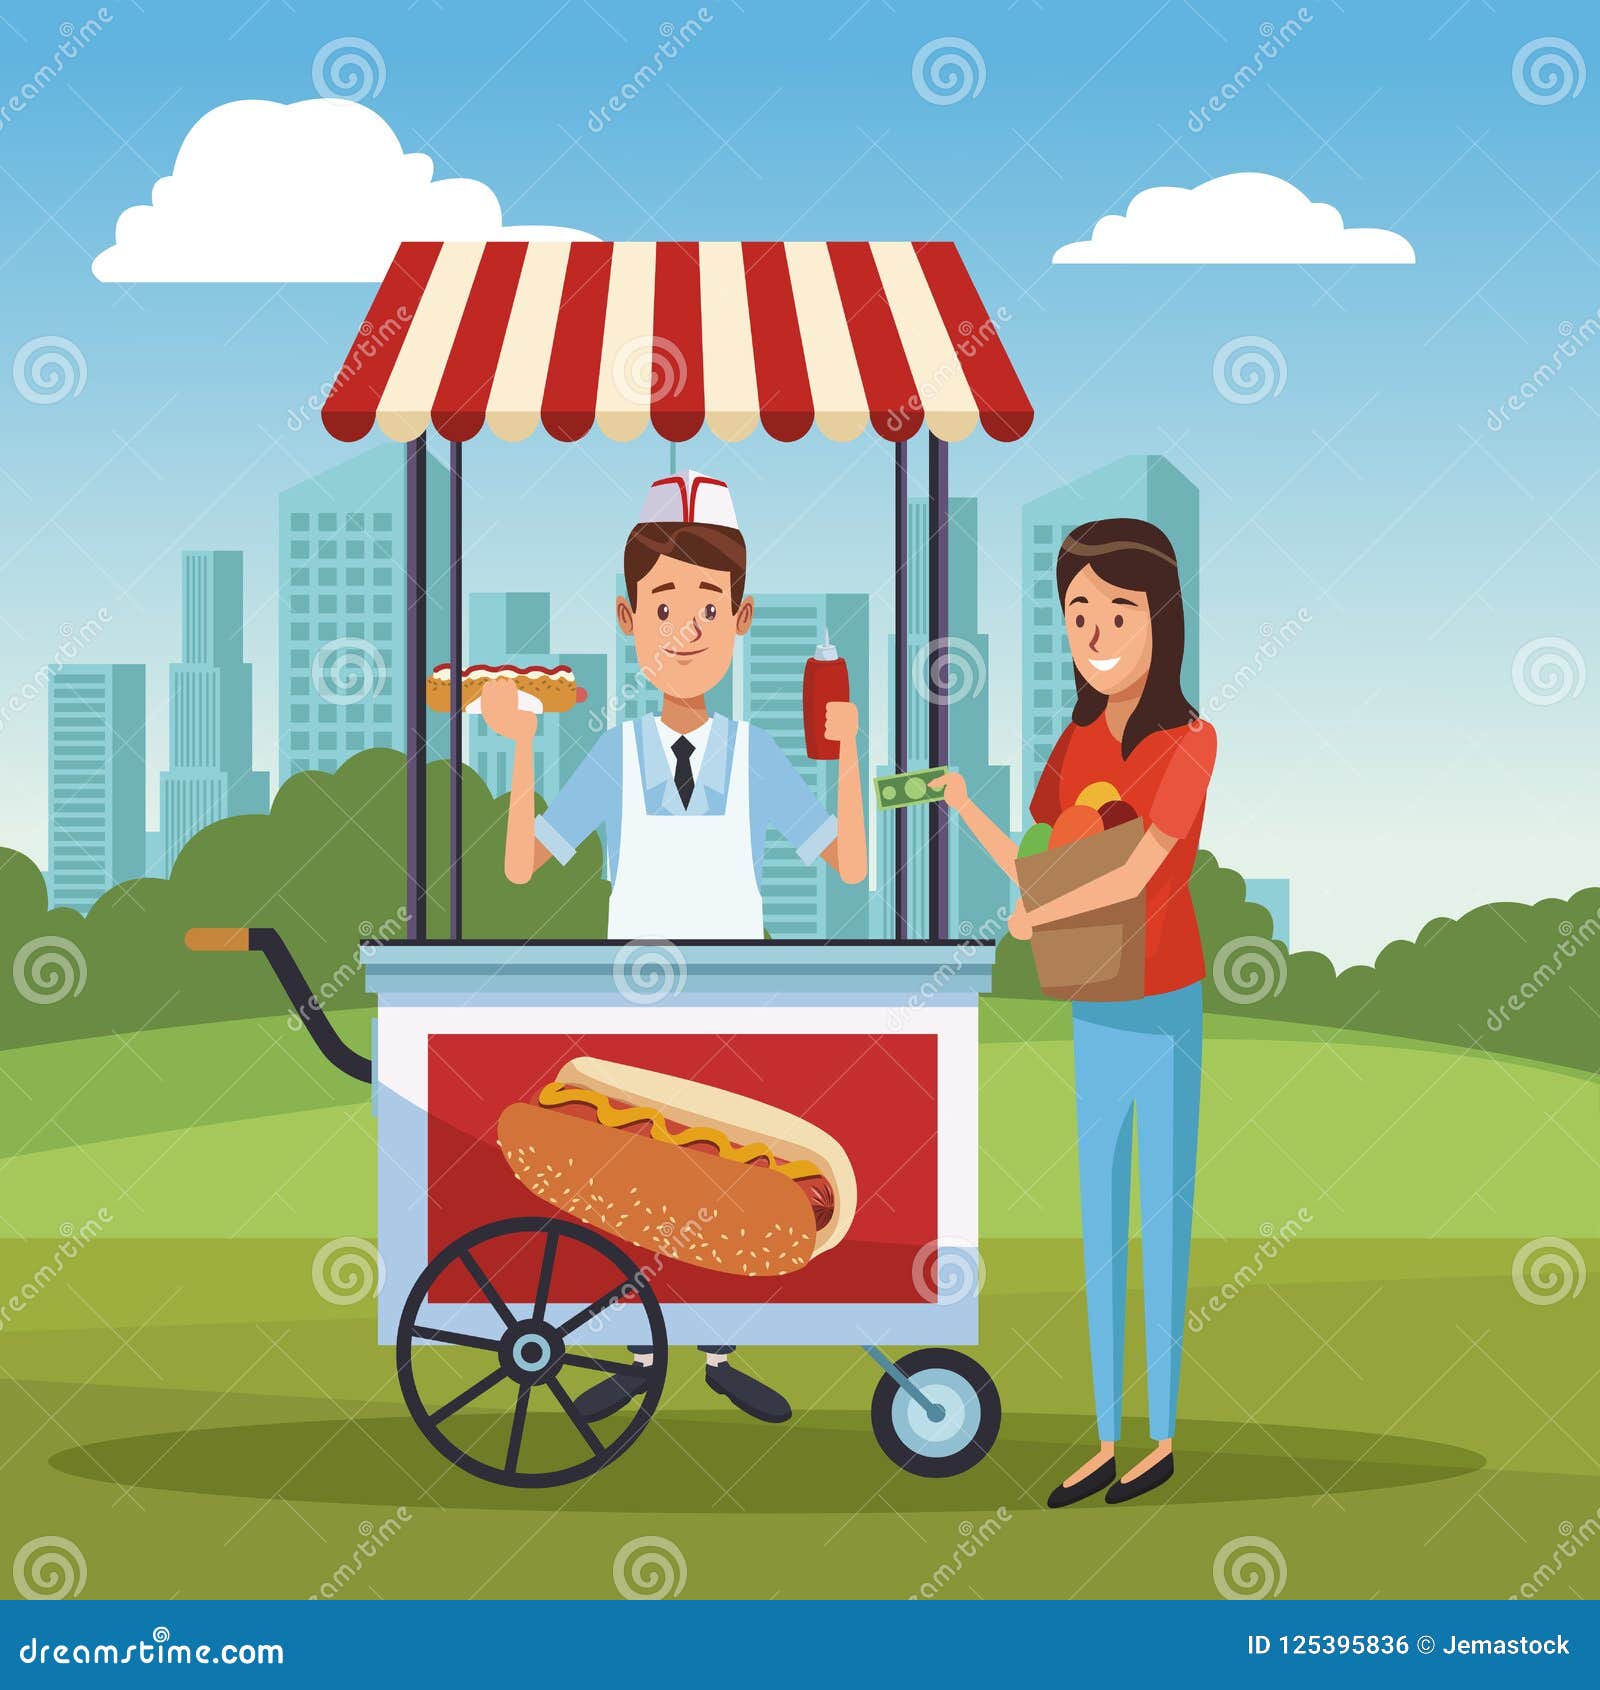 Hot dog cart in park stock vector. Illustration of park - 125395836